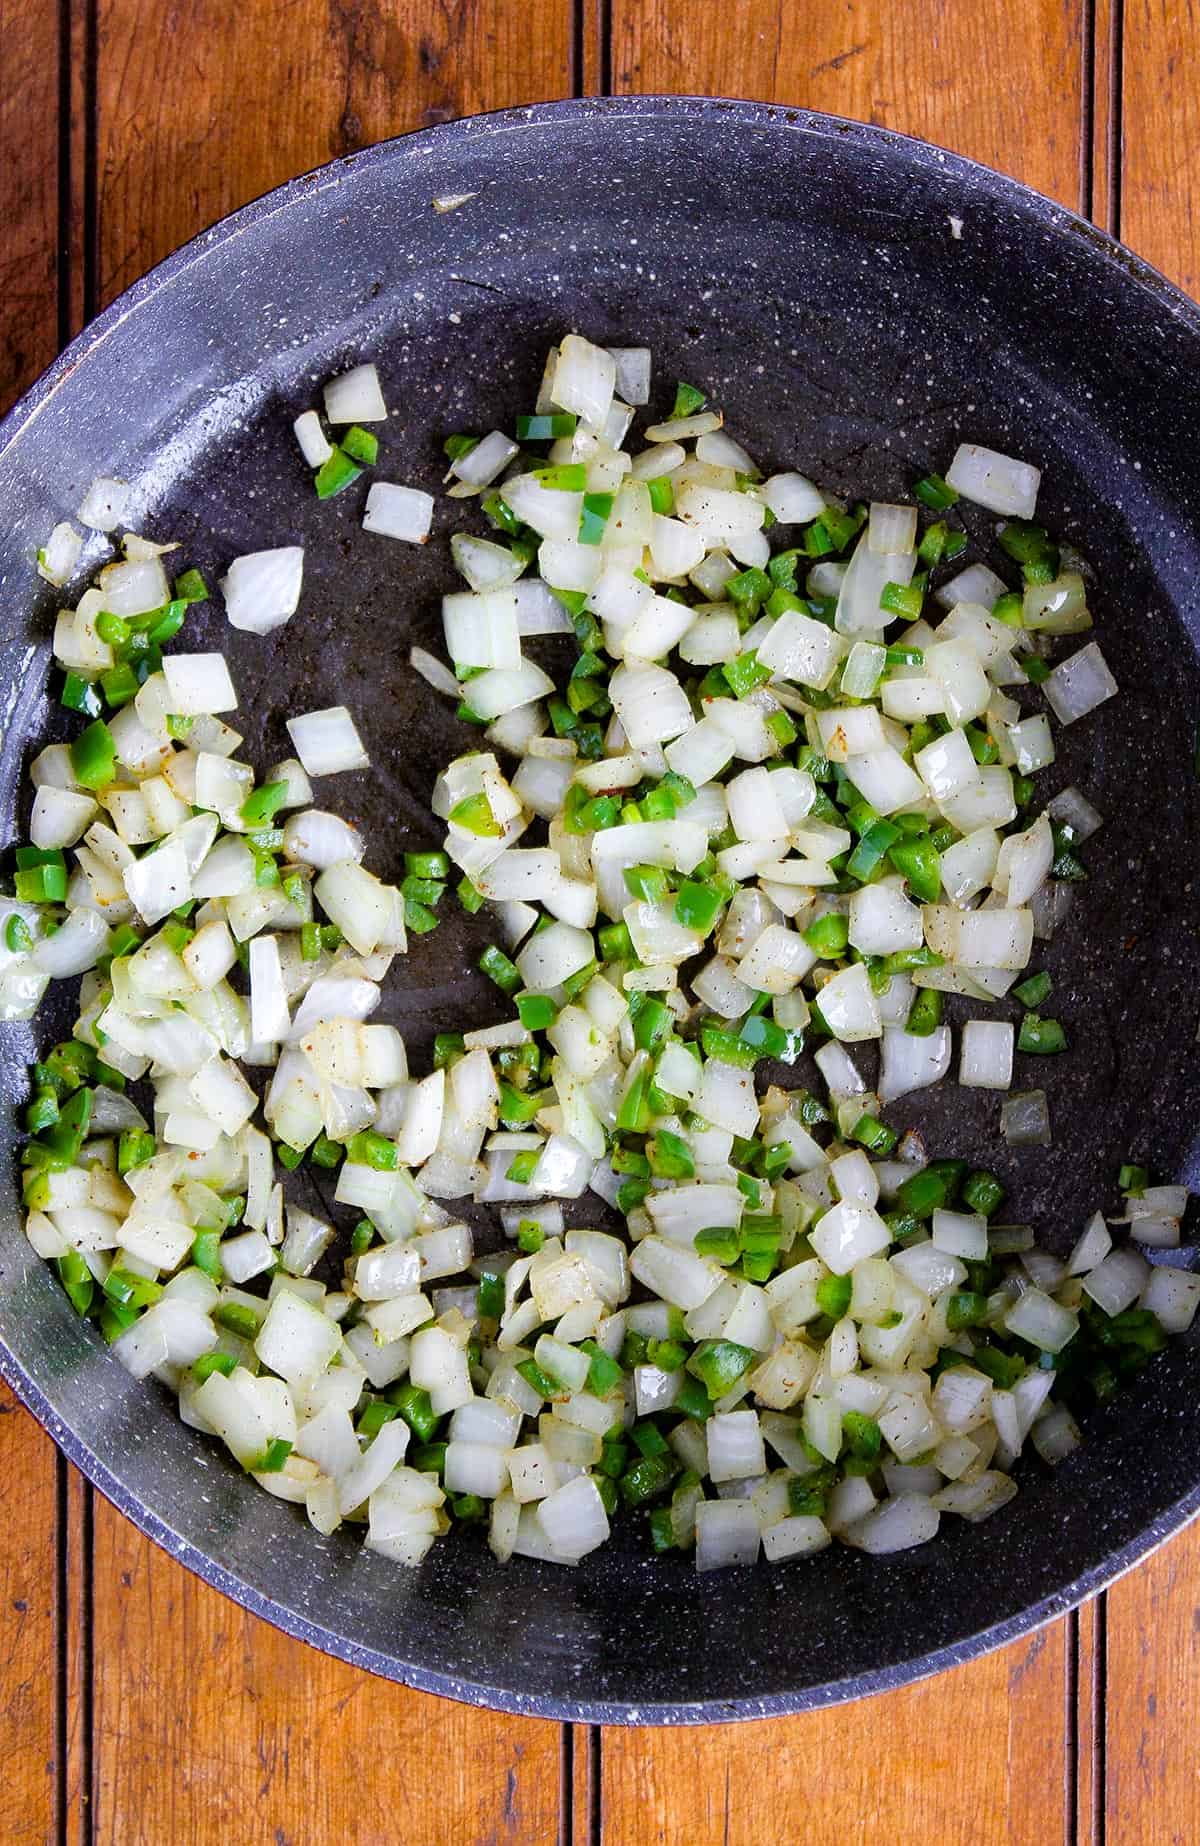 Sauteed onions and jalapeno.